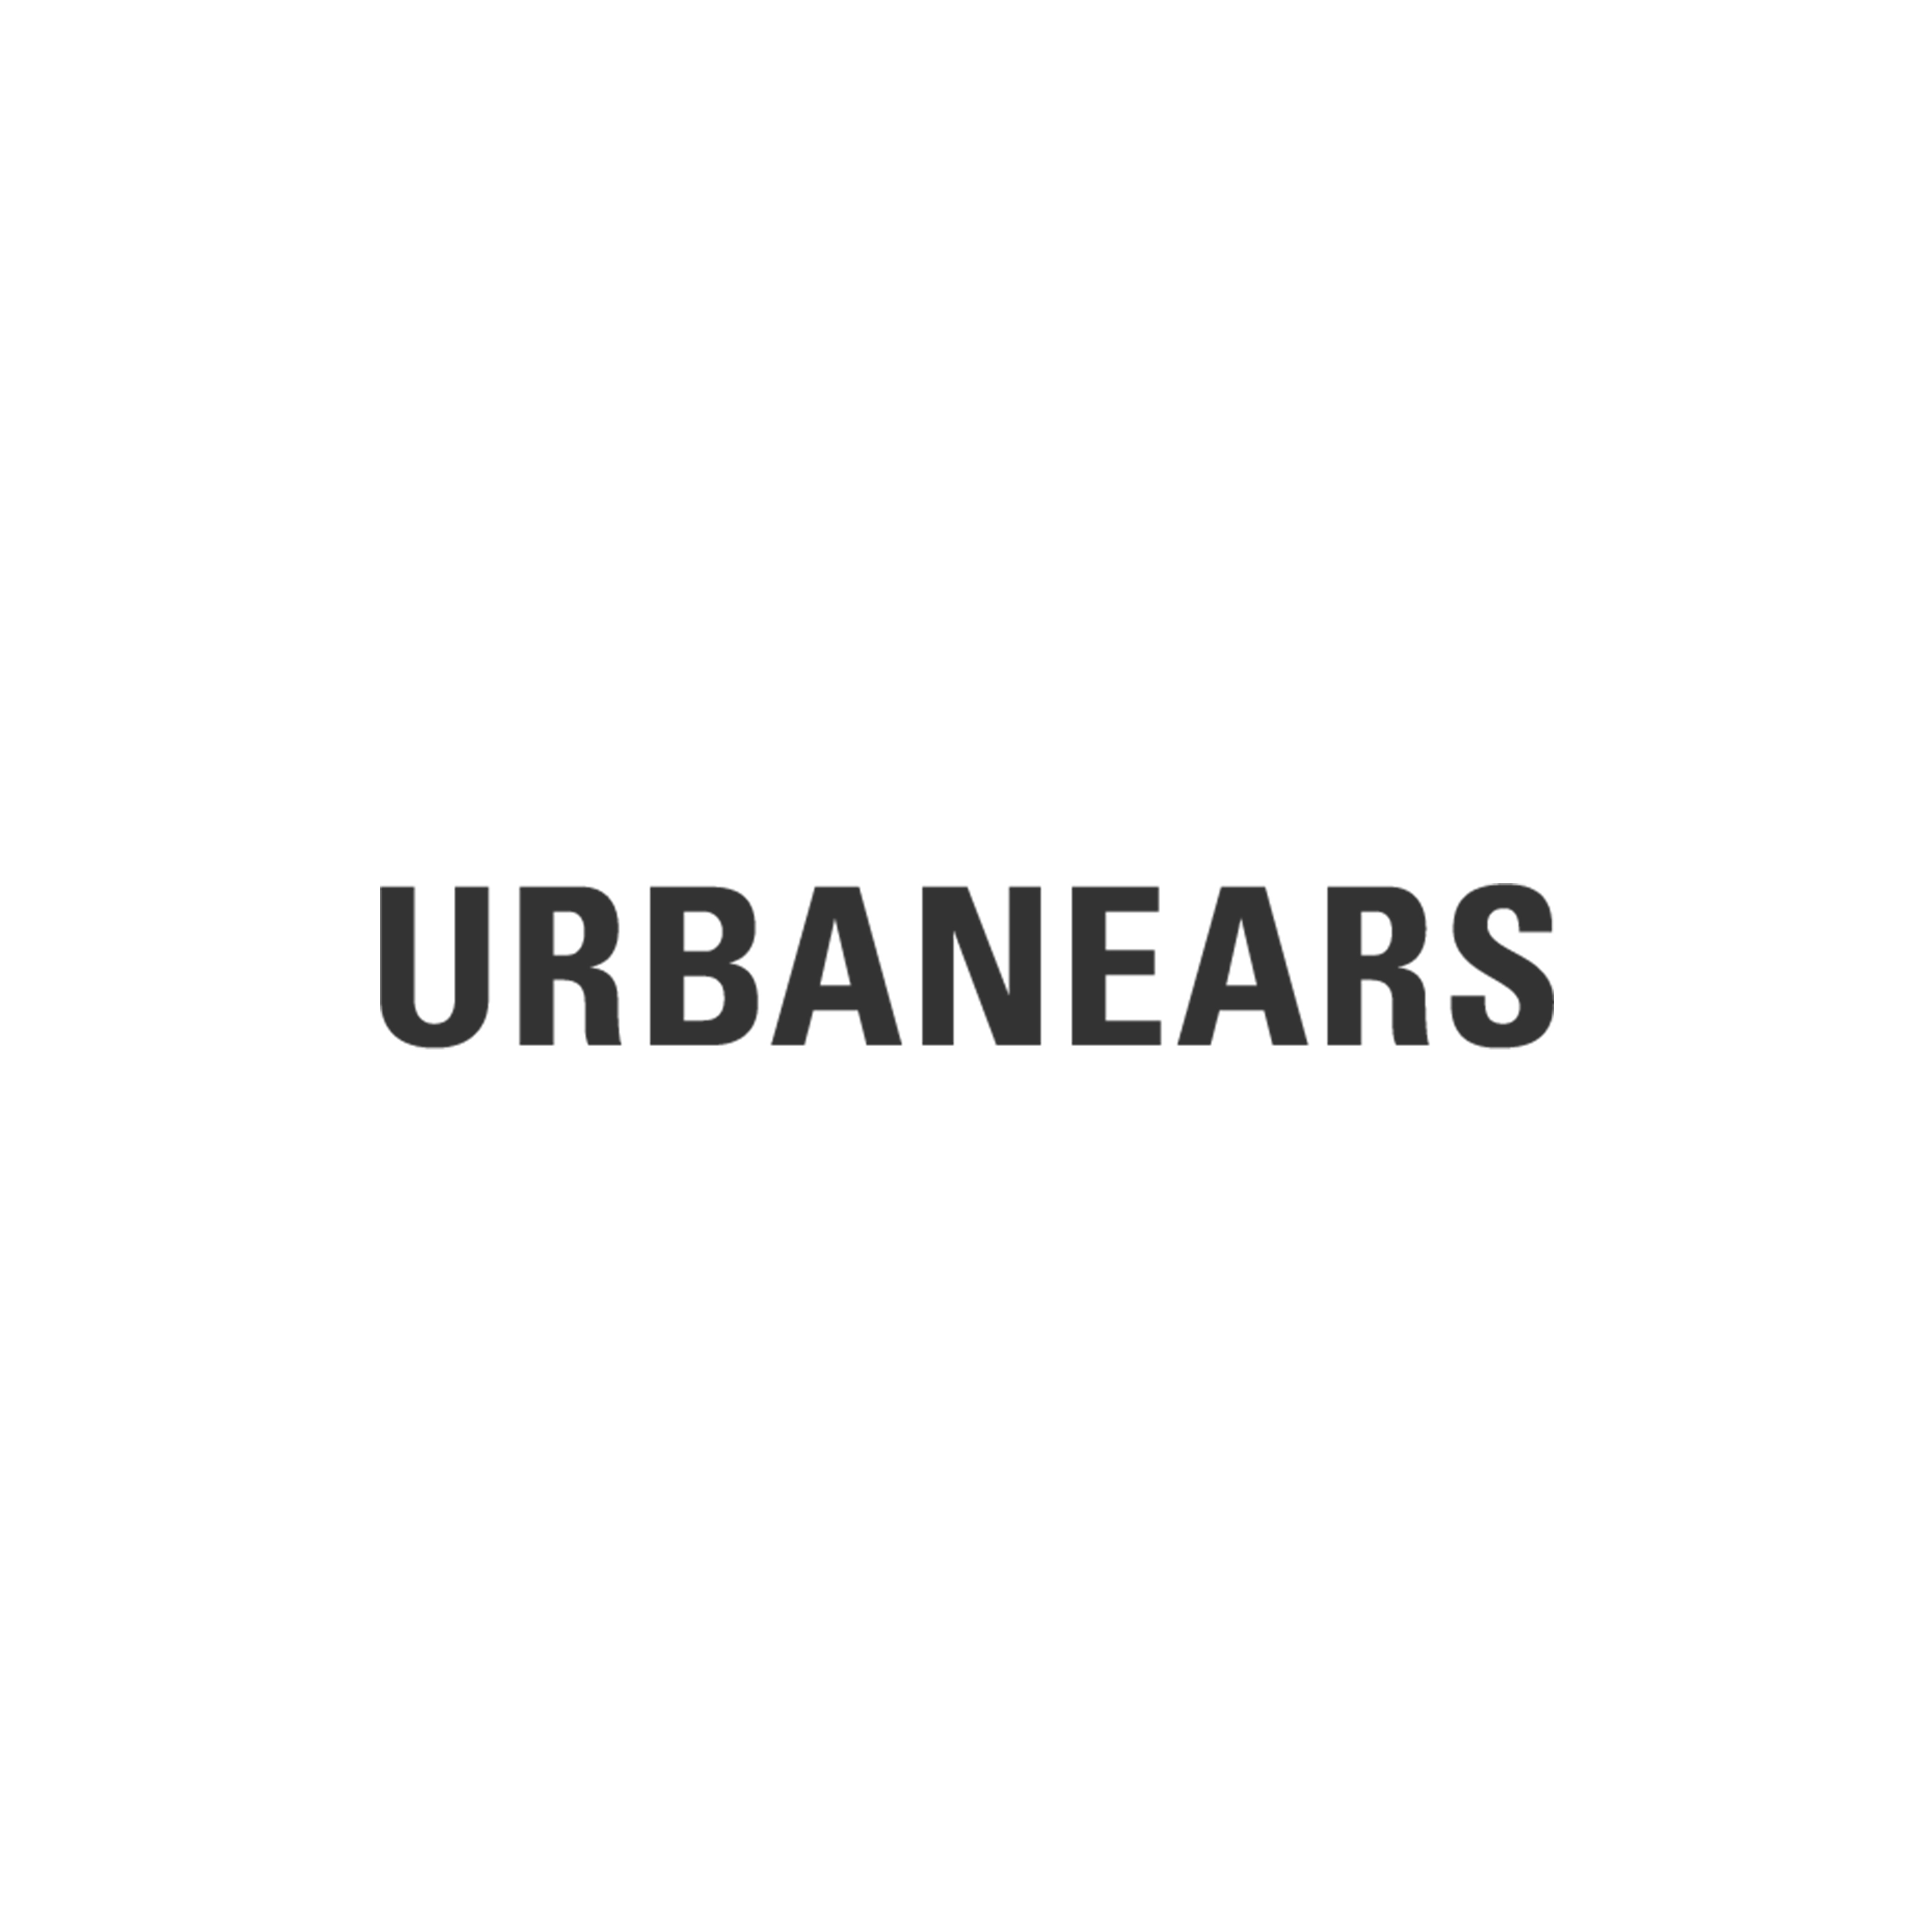 Shop Urbanears logo